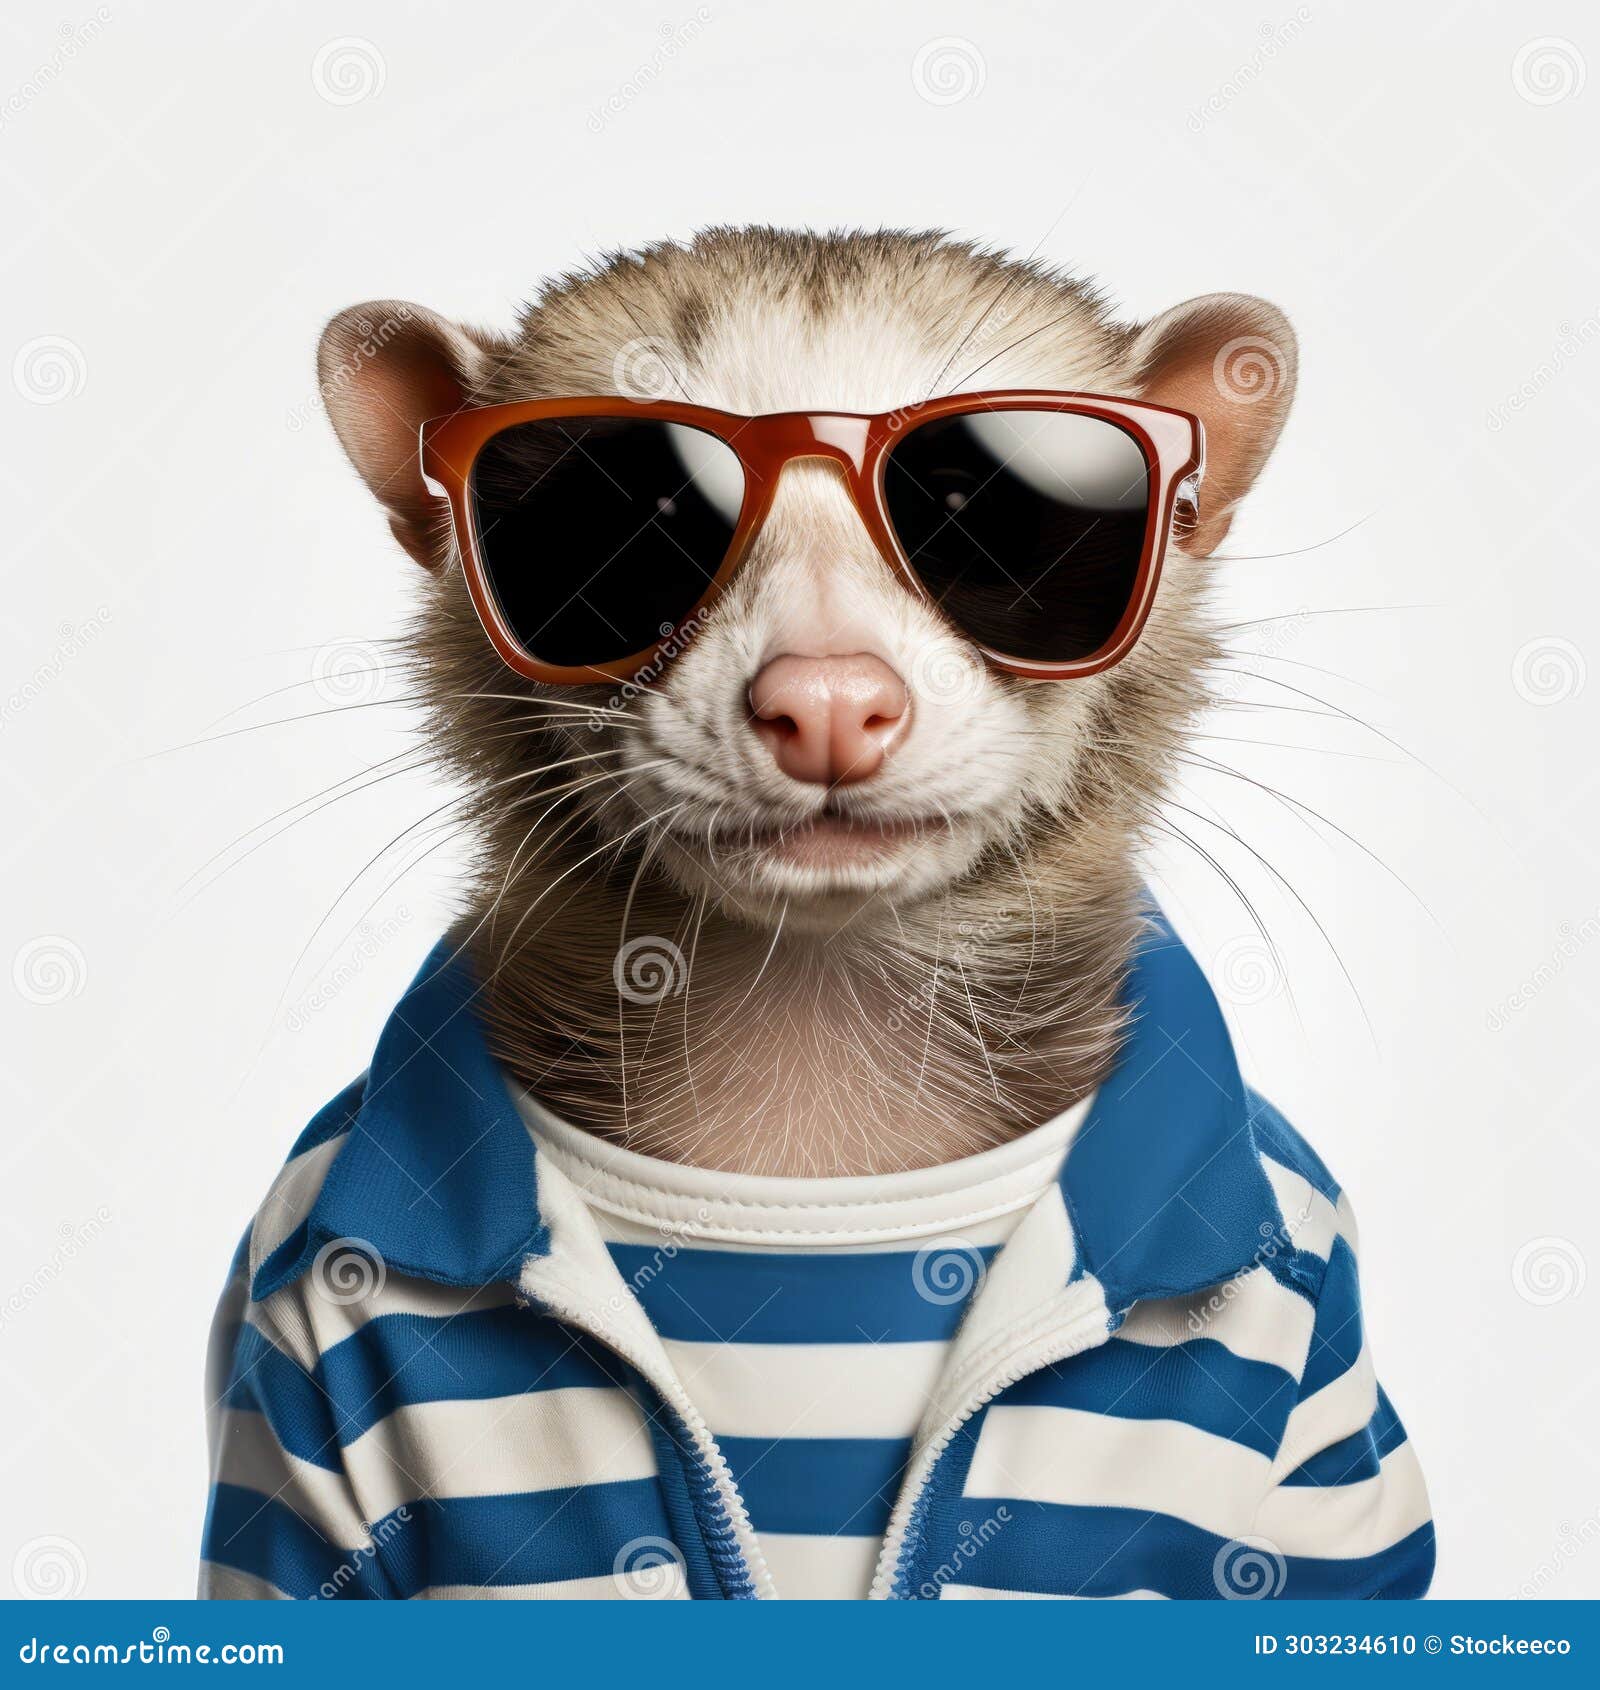 funny ferret in sunglasses: hip-hop style advertising-inspired wimmelbilder